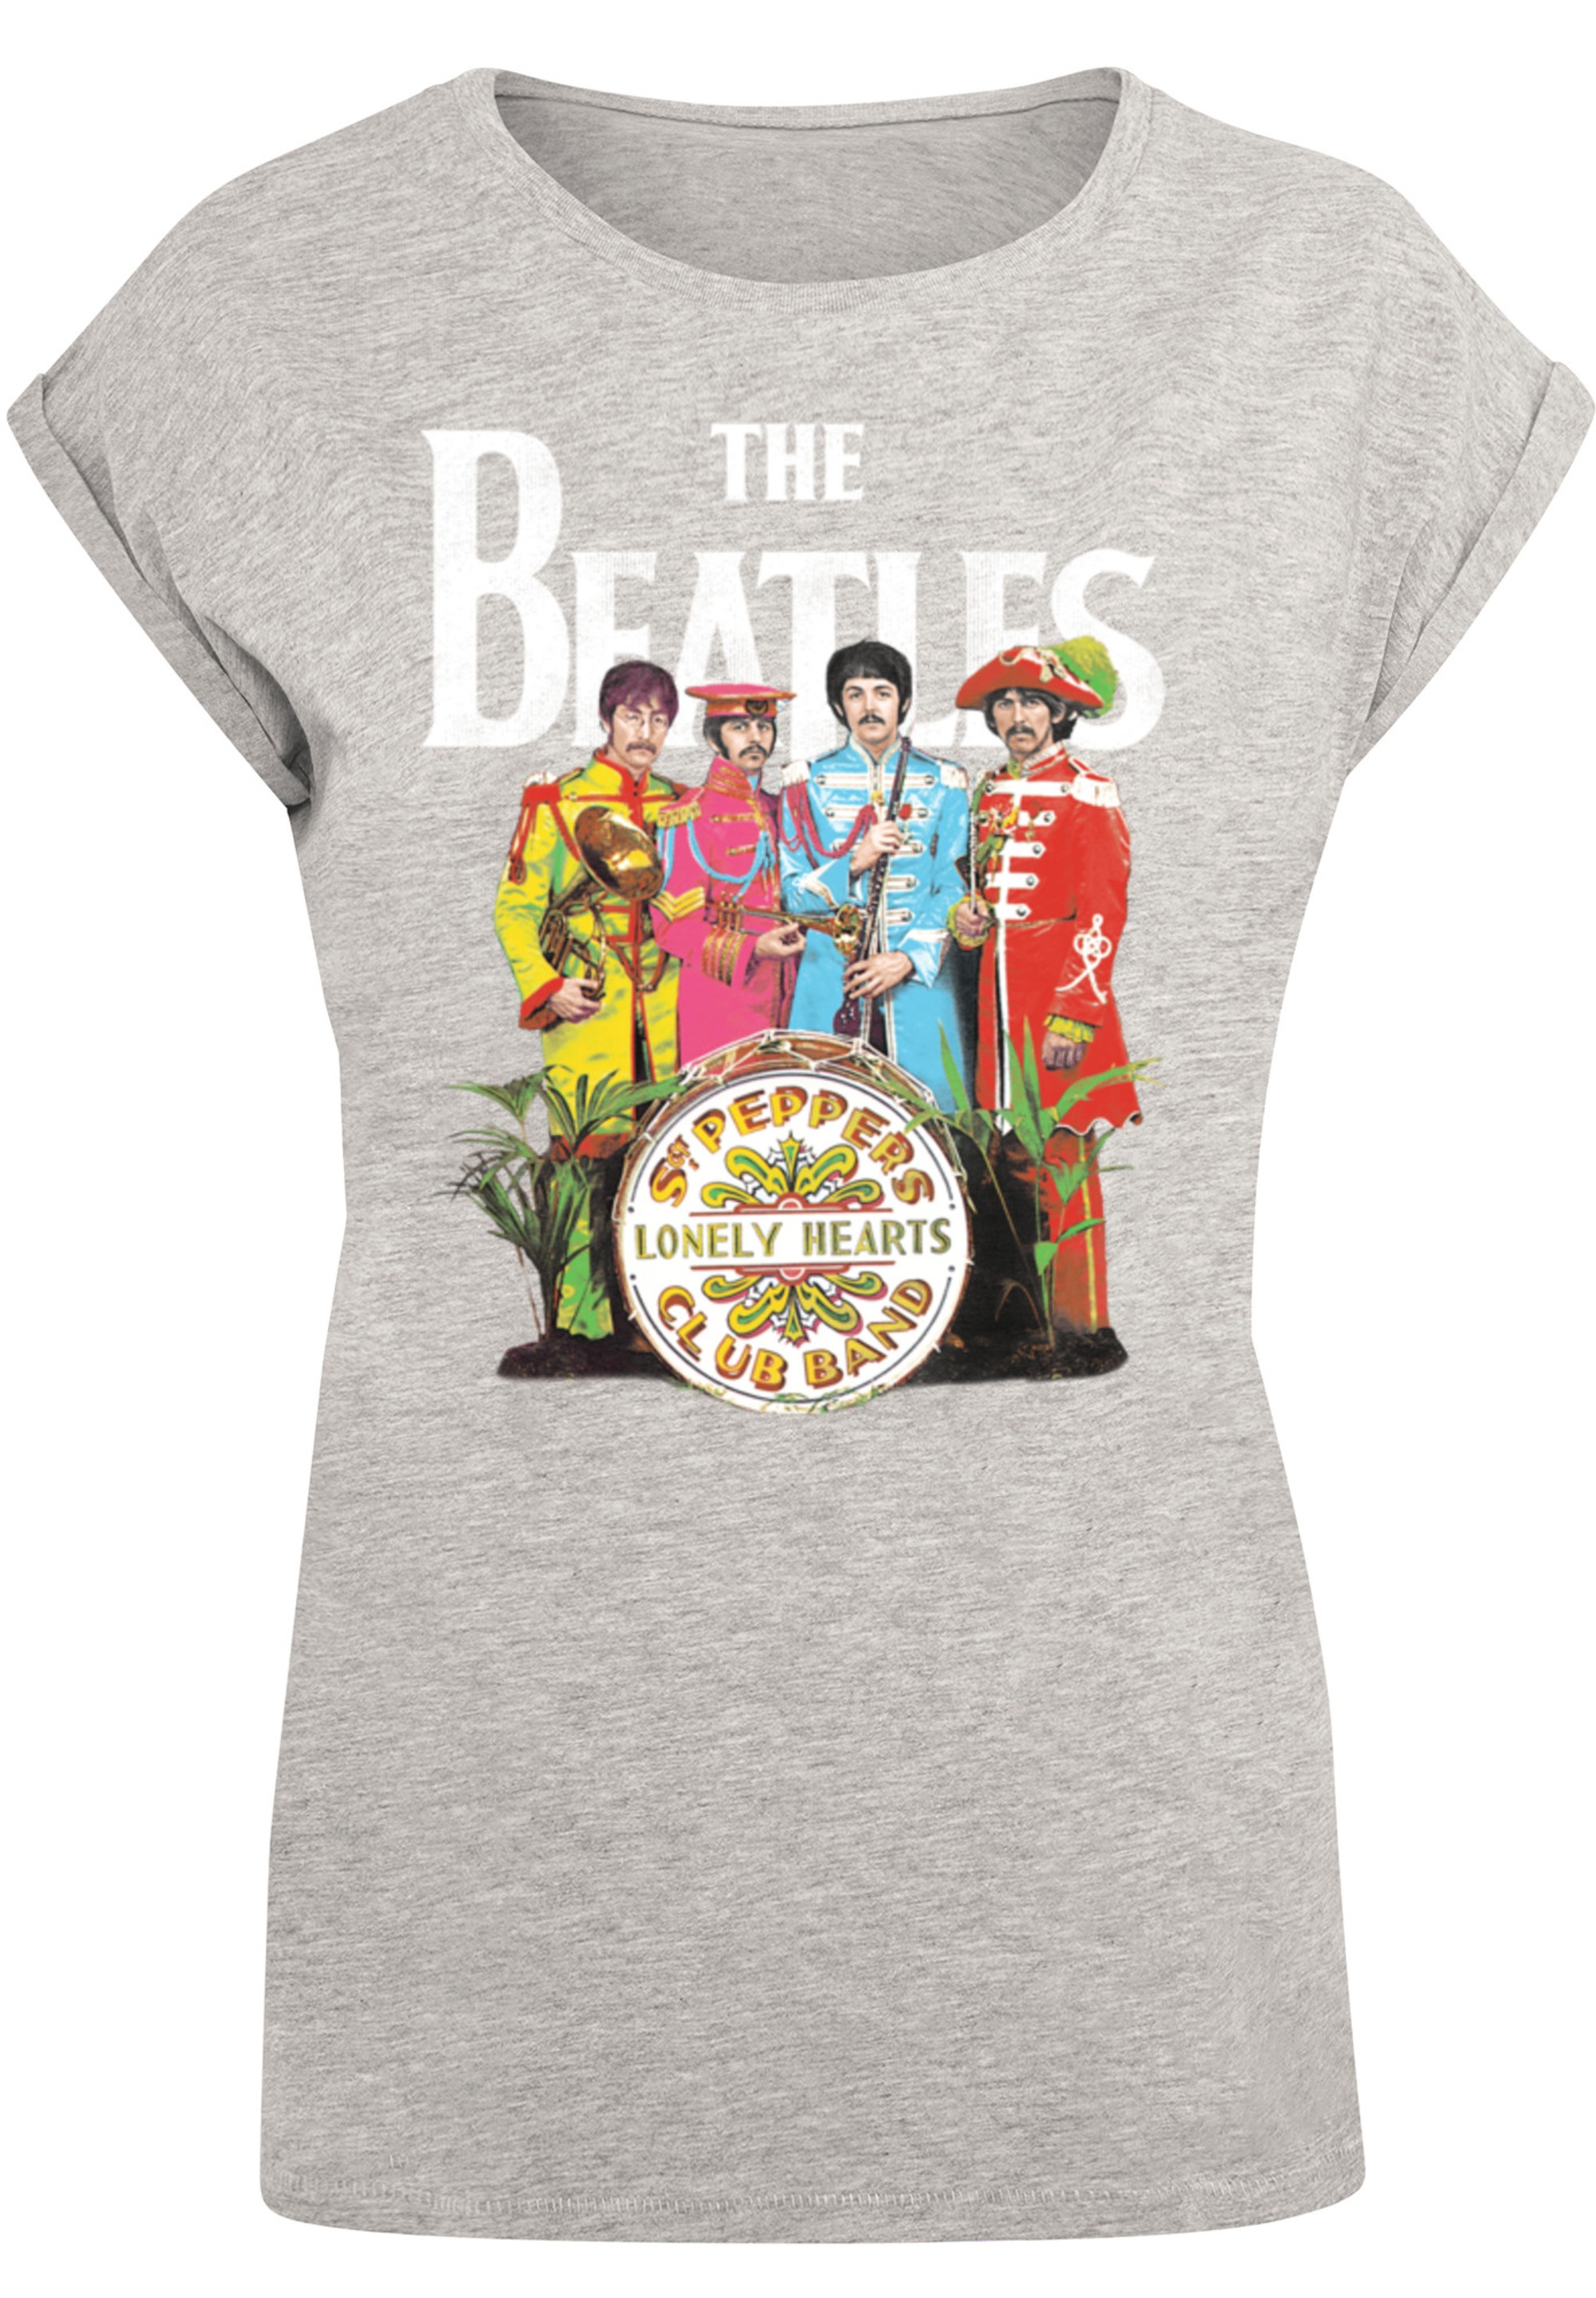 Erstes direkt geführtes Geschäft Black Friday Beatles BAUR F4NT4STIC T-Shirt | »The Black«, Pepper Band Print Sgt